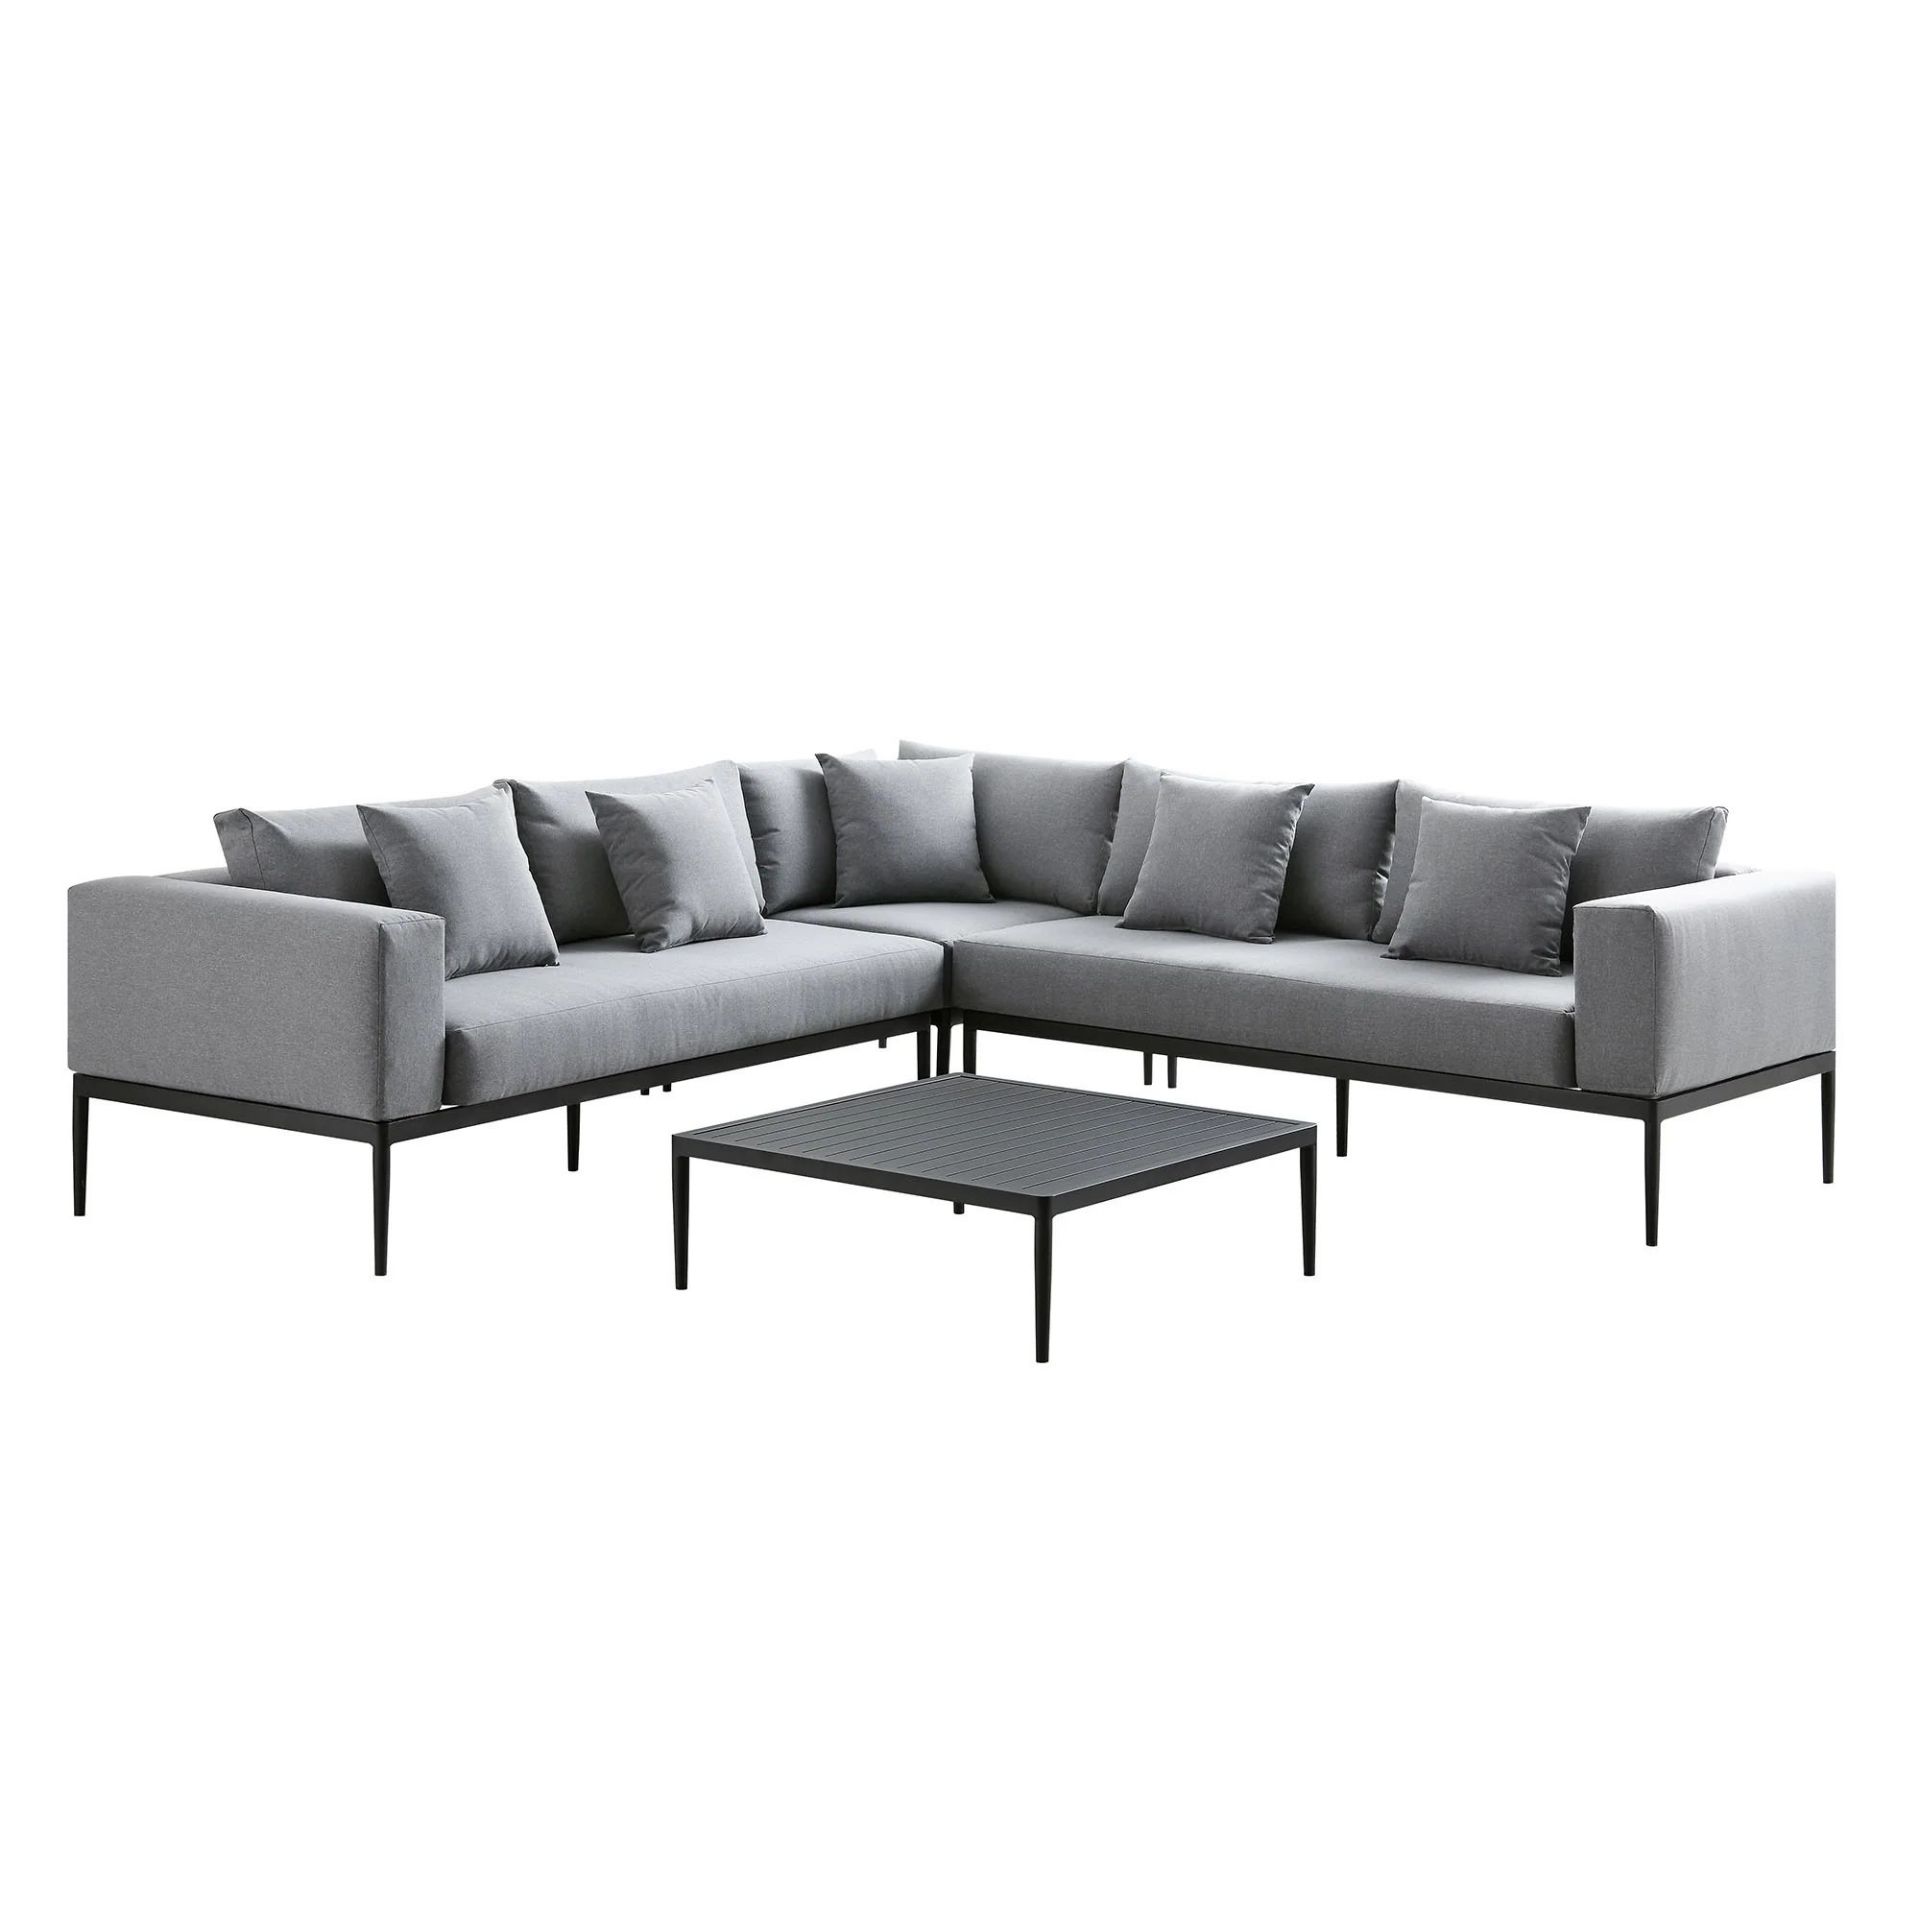 Calabasas Large Outdoor Fabric Aluminium Frame Corner Sofa Set with Coffee Table, Dark Grey. - - Image 2 of 2